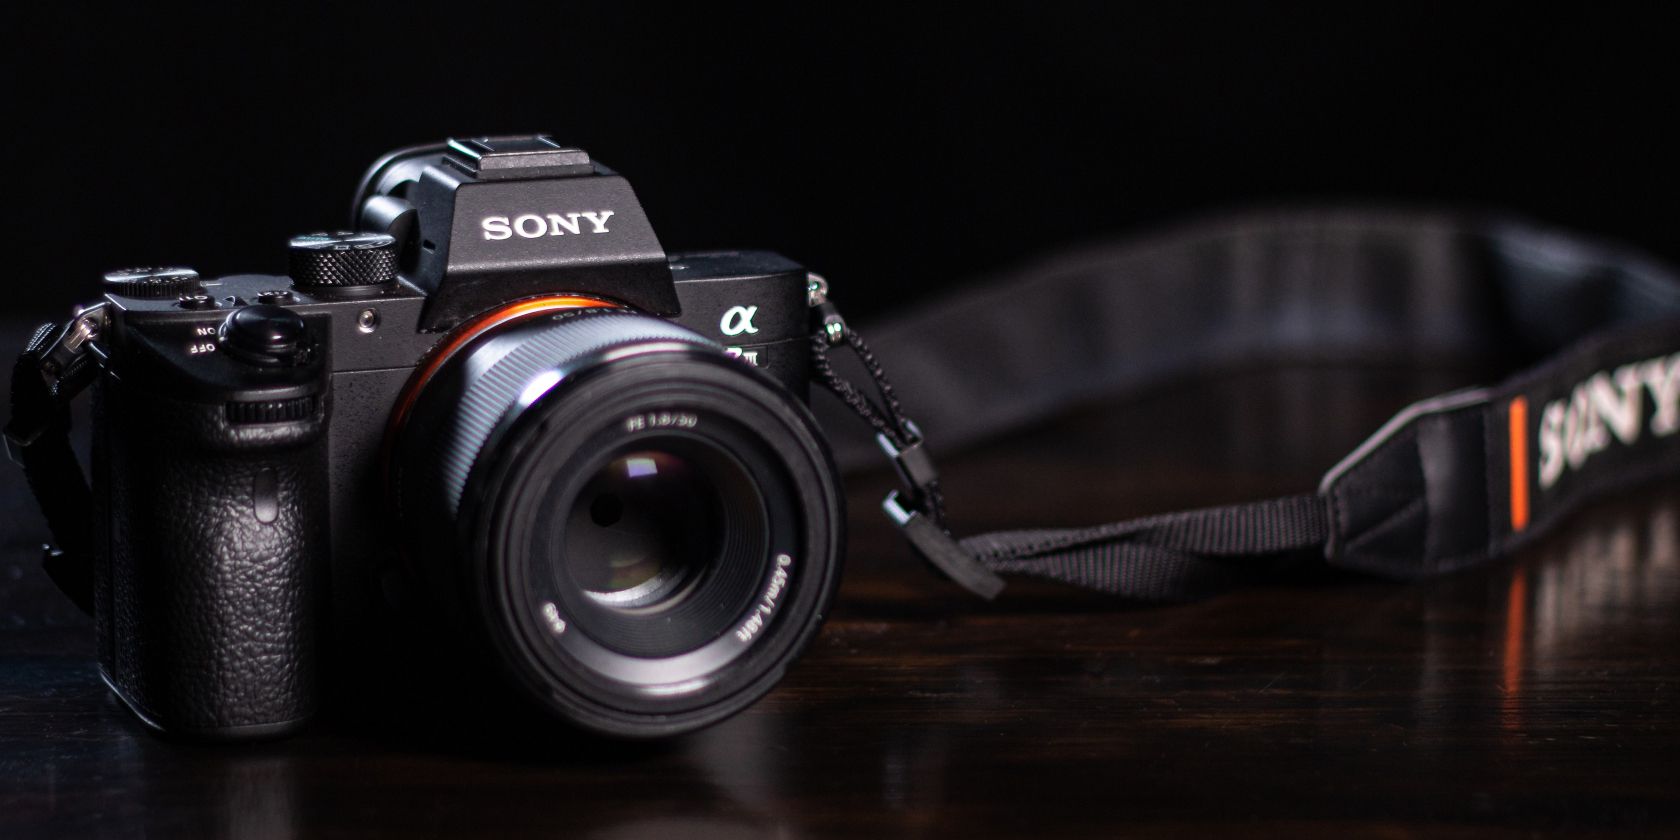 photo of a Sony mirrorless camera